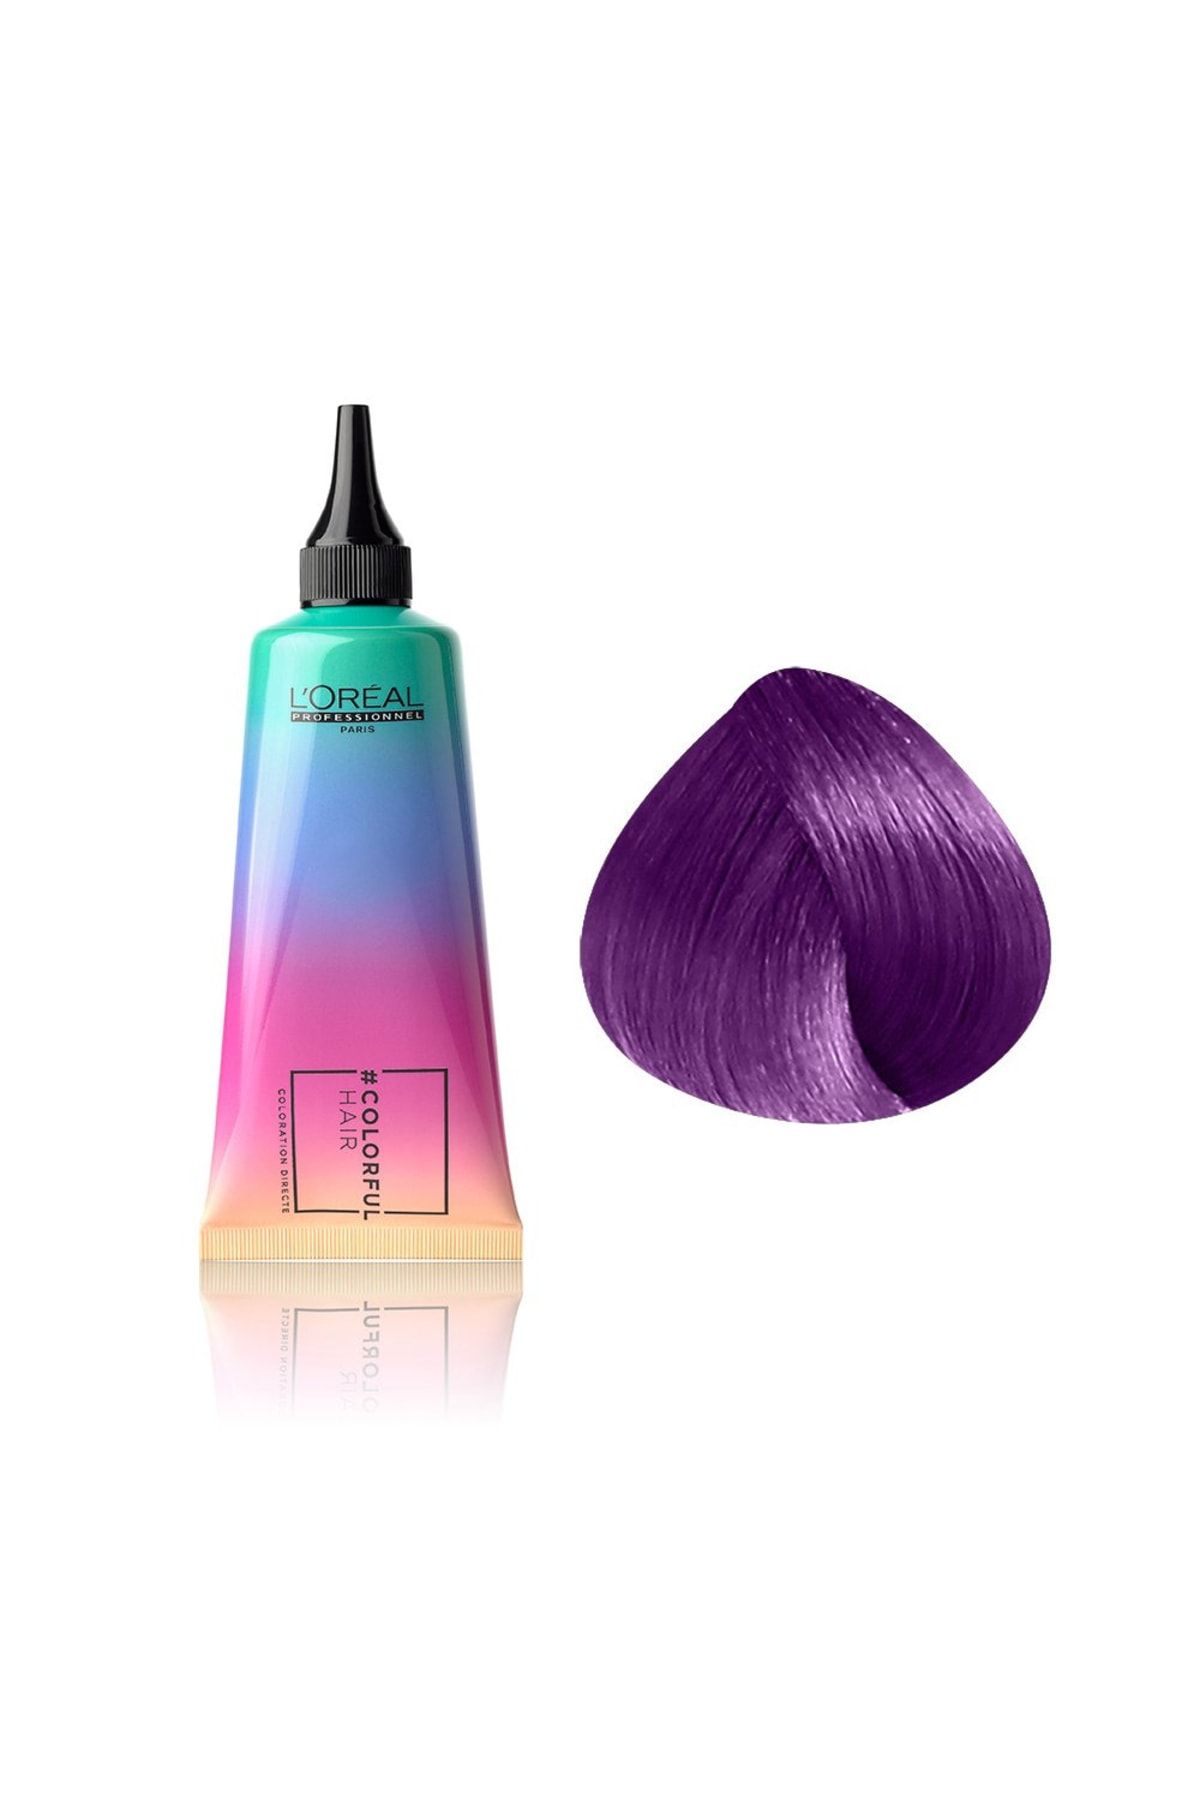 L'oreal Professionnel Colorful Hair Electric Purple Purple Defined Semi Permament Ammonia Free Hair Color Cream 90ml